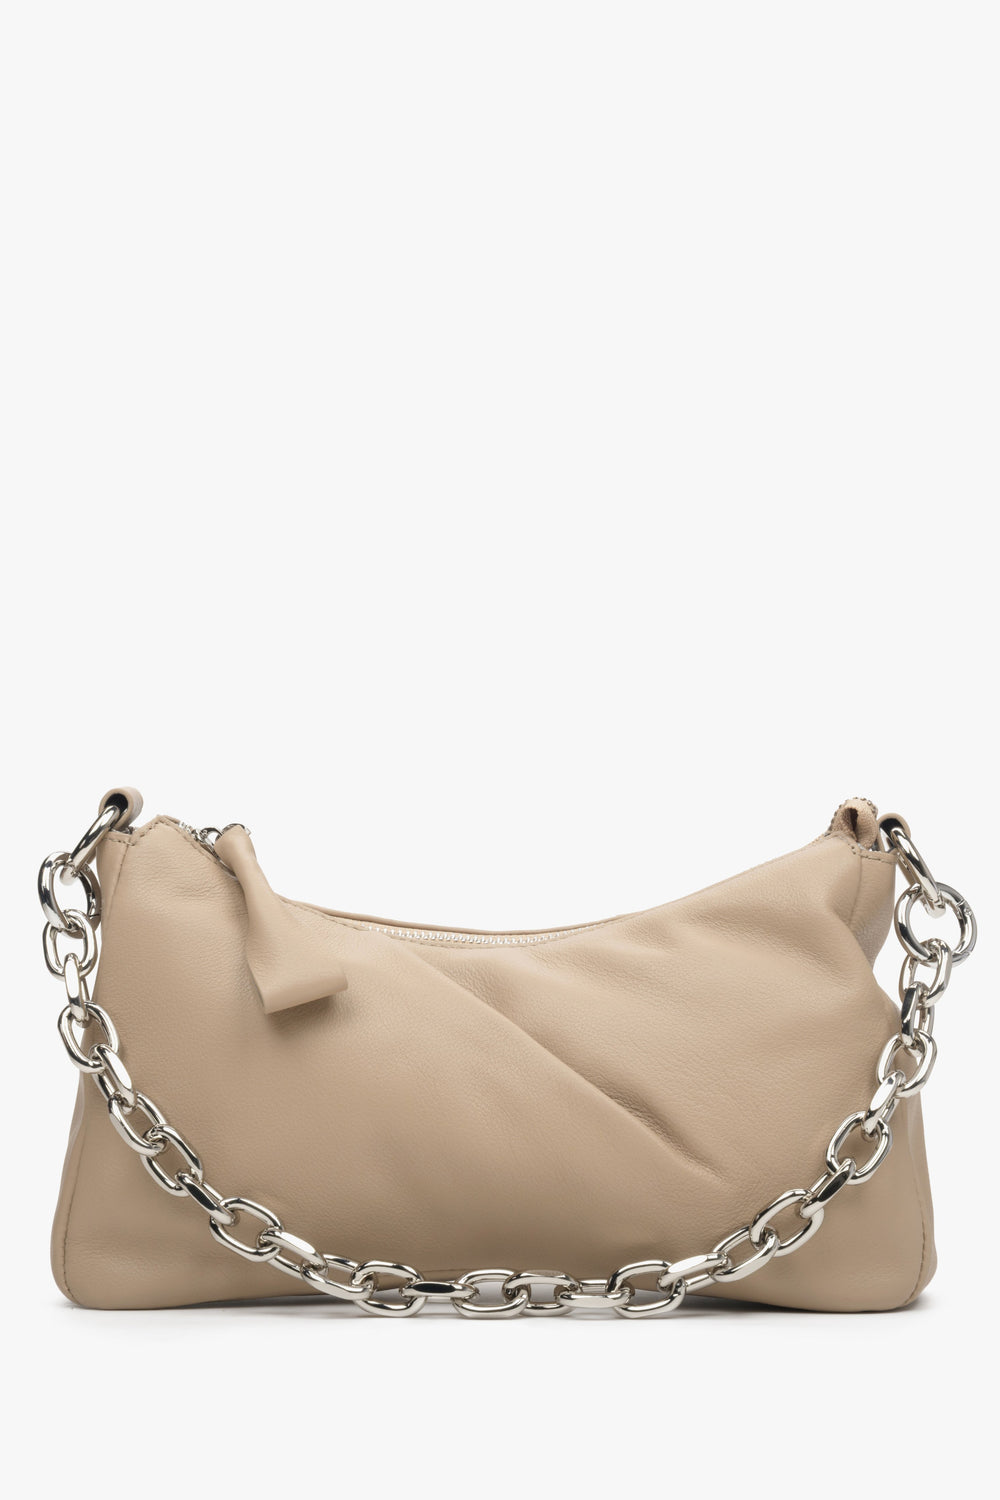 Women's Beige Chain Strap Shoulder Bag made of Genuine Leather Estro ER00113722.